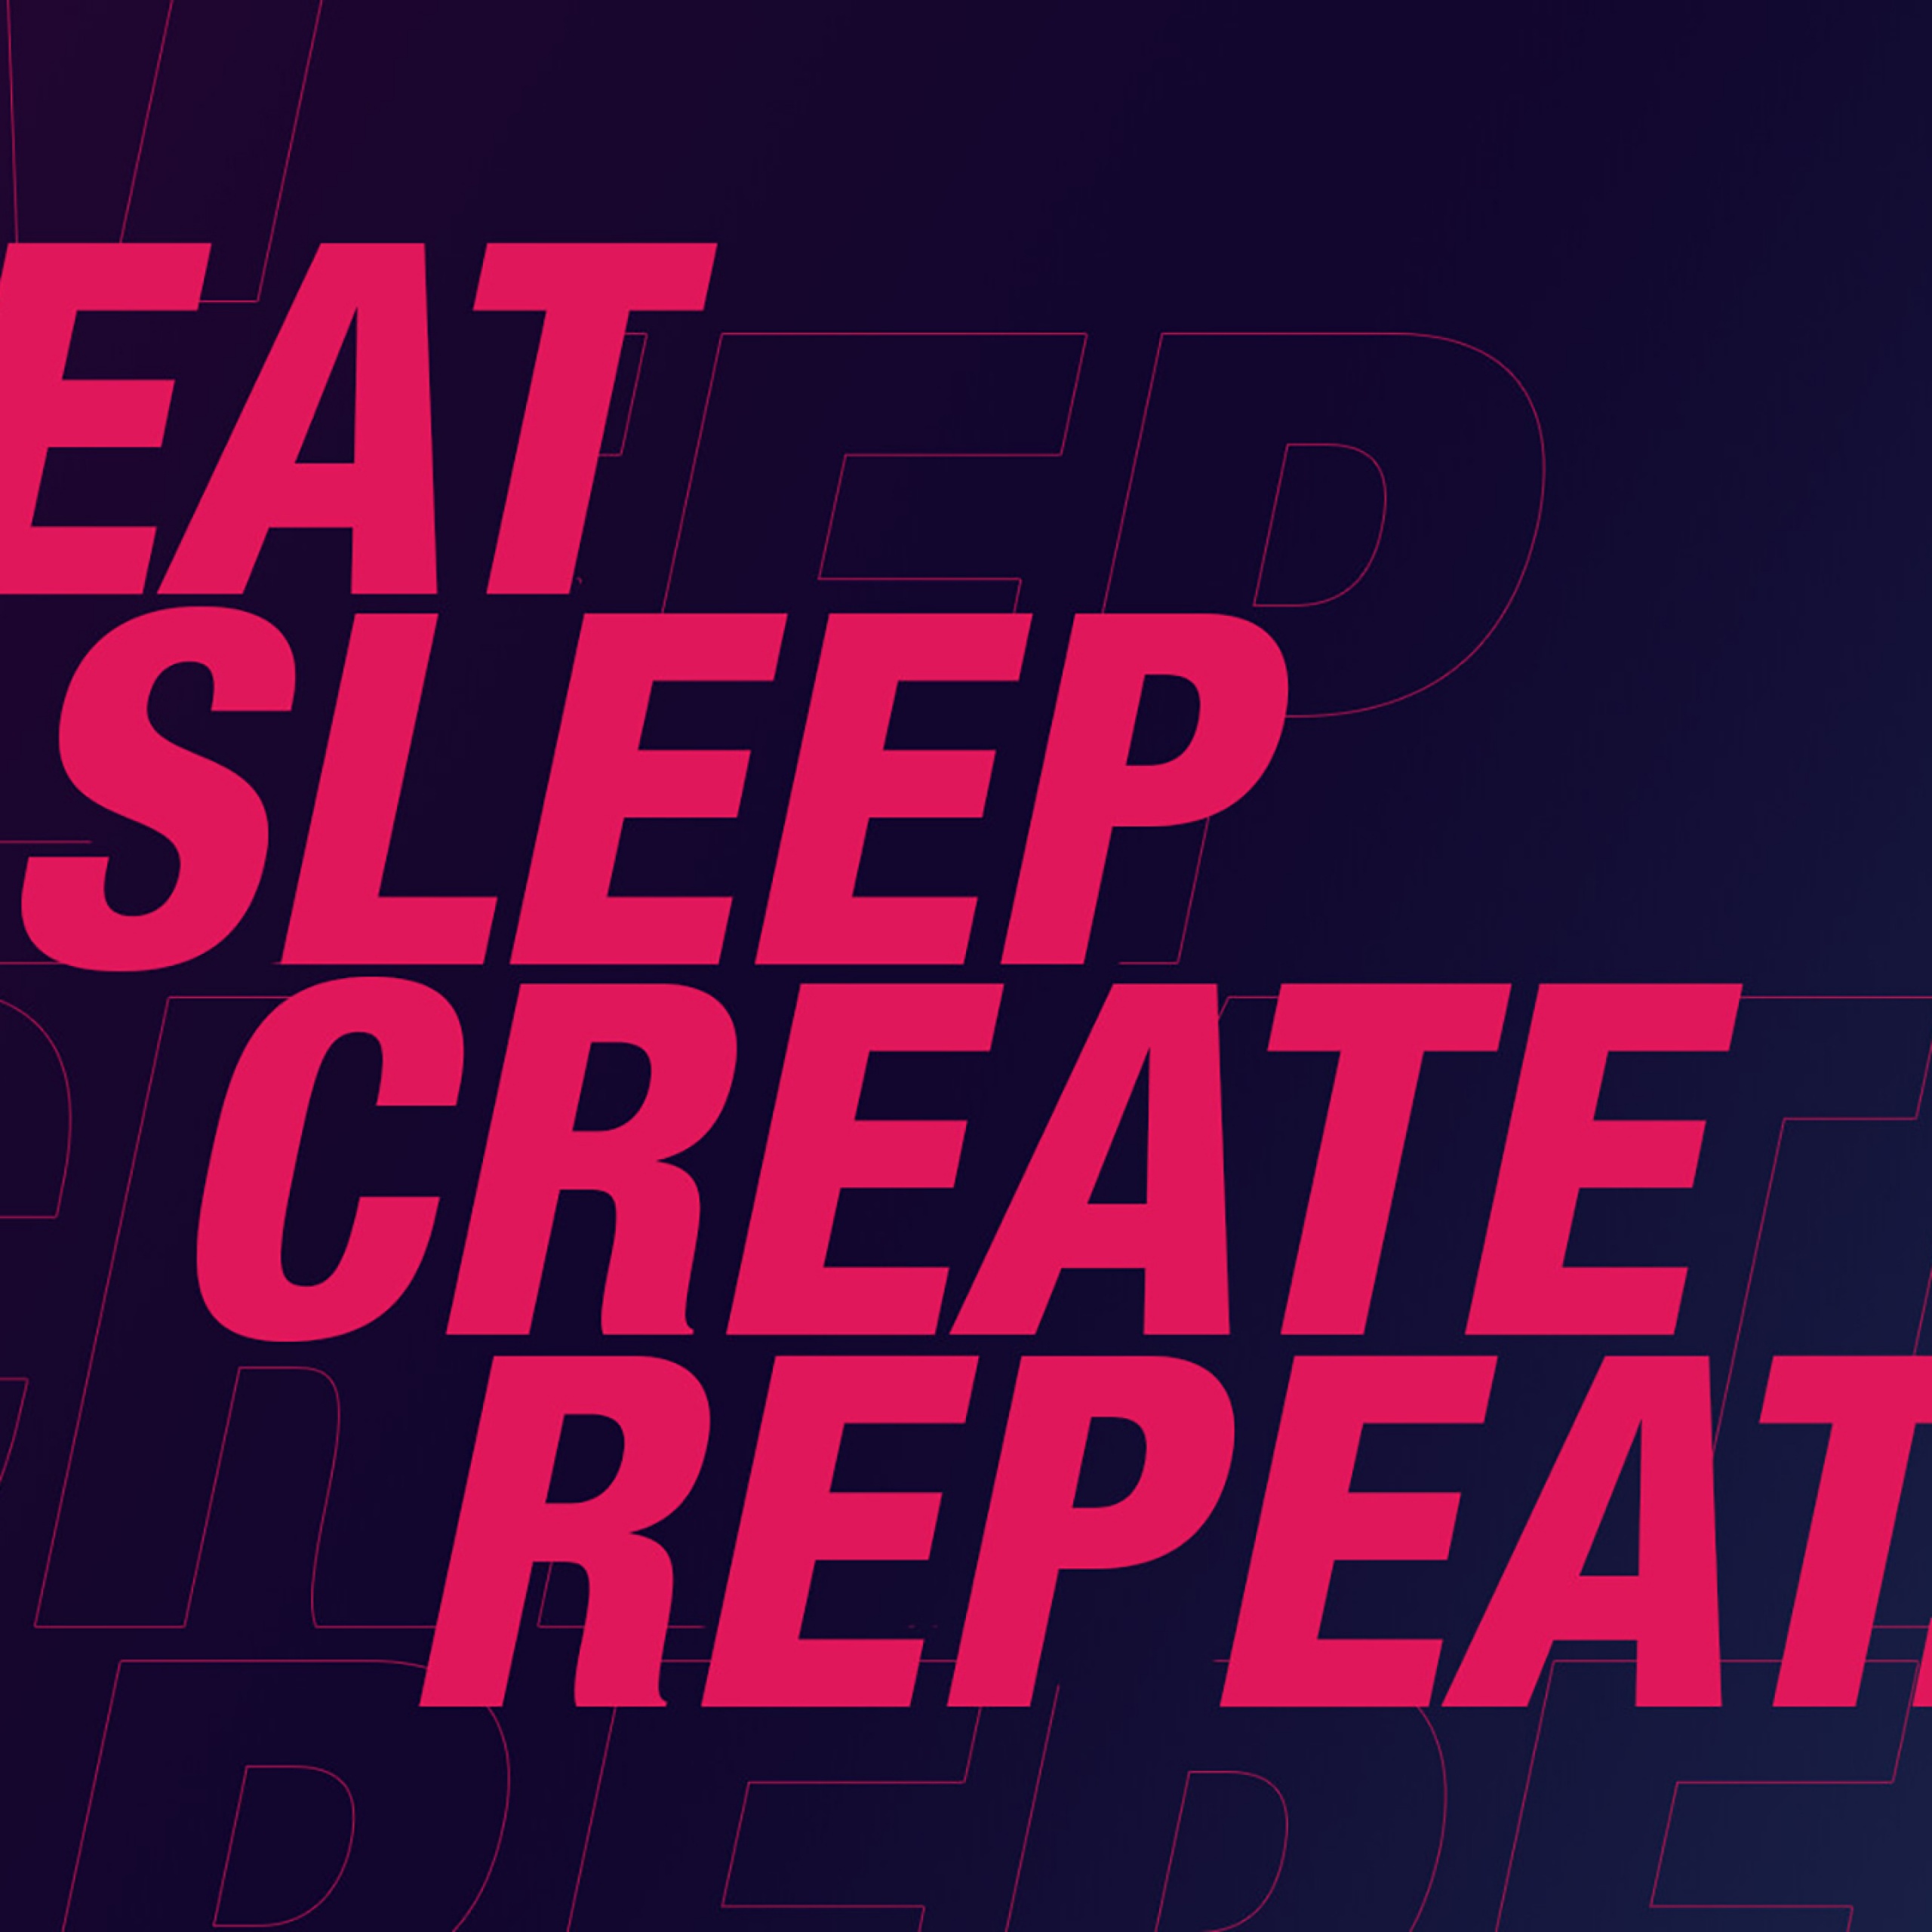 Eat Sleep Code Repeat Wallpaper in 4K